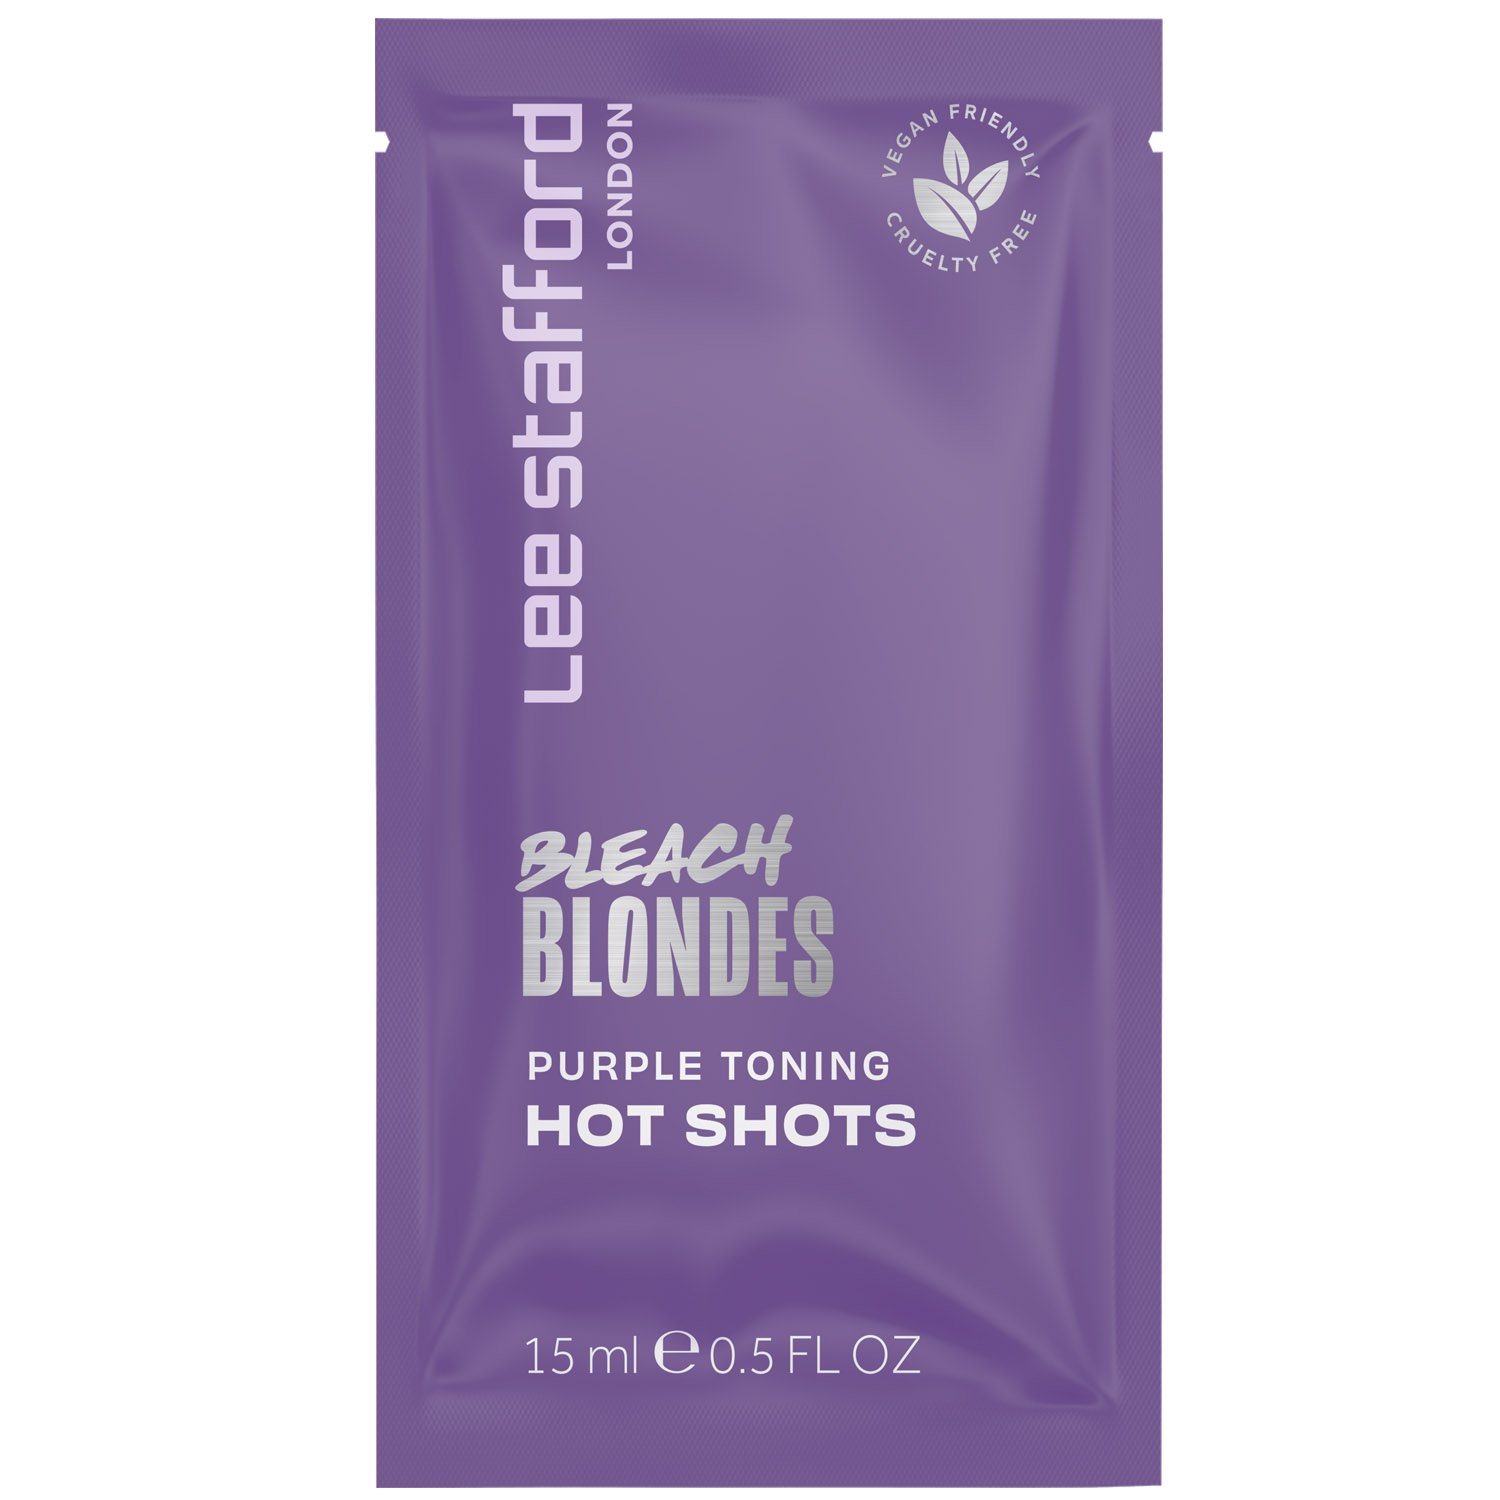 Ампулы для осветленных волос Lee Stafford Bleach Blondes Purple Toning Hot Shots тонирующие 4 шт. х 15 мл - фото 2